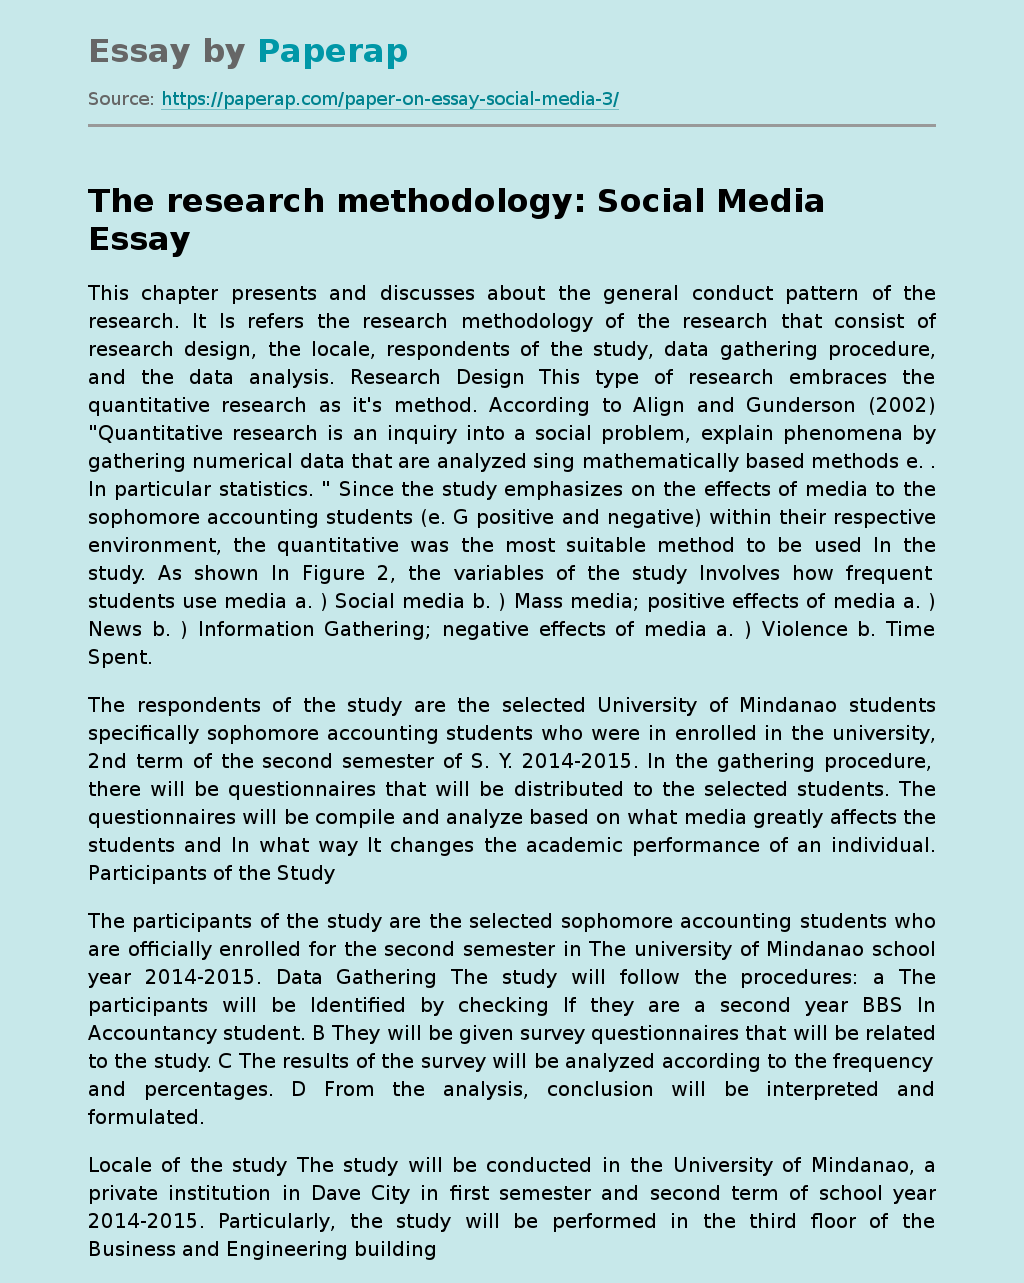 The Research Methodology: Social Media